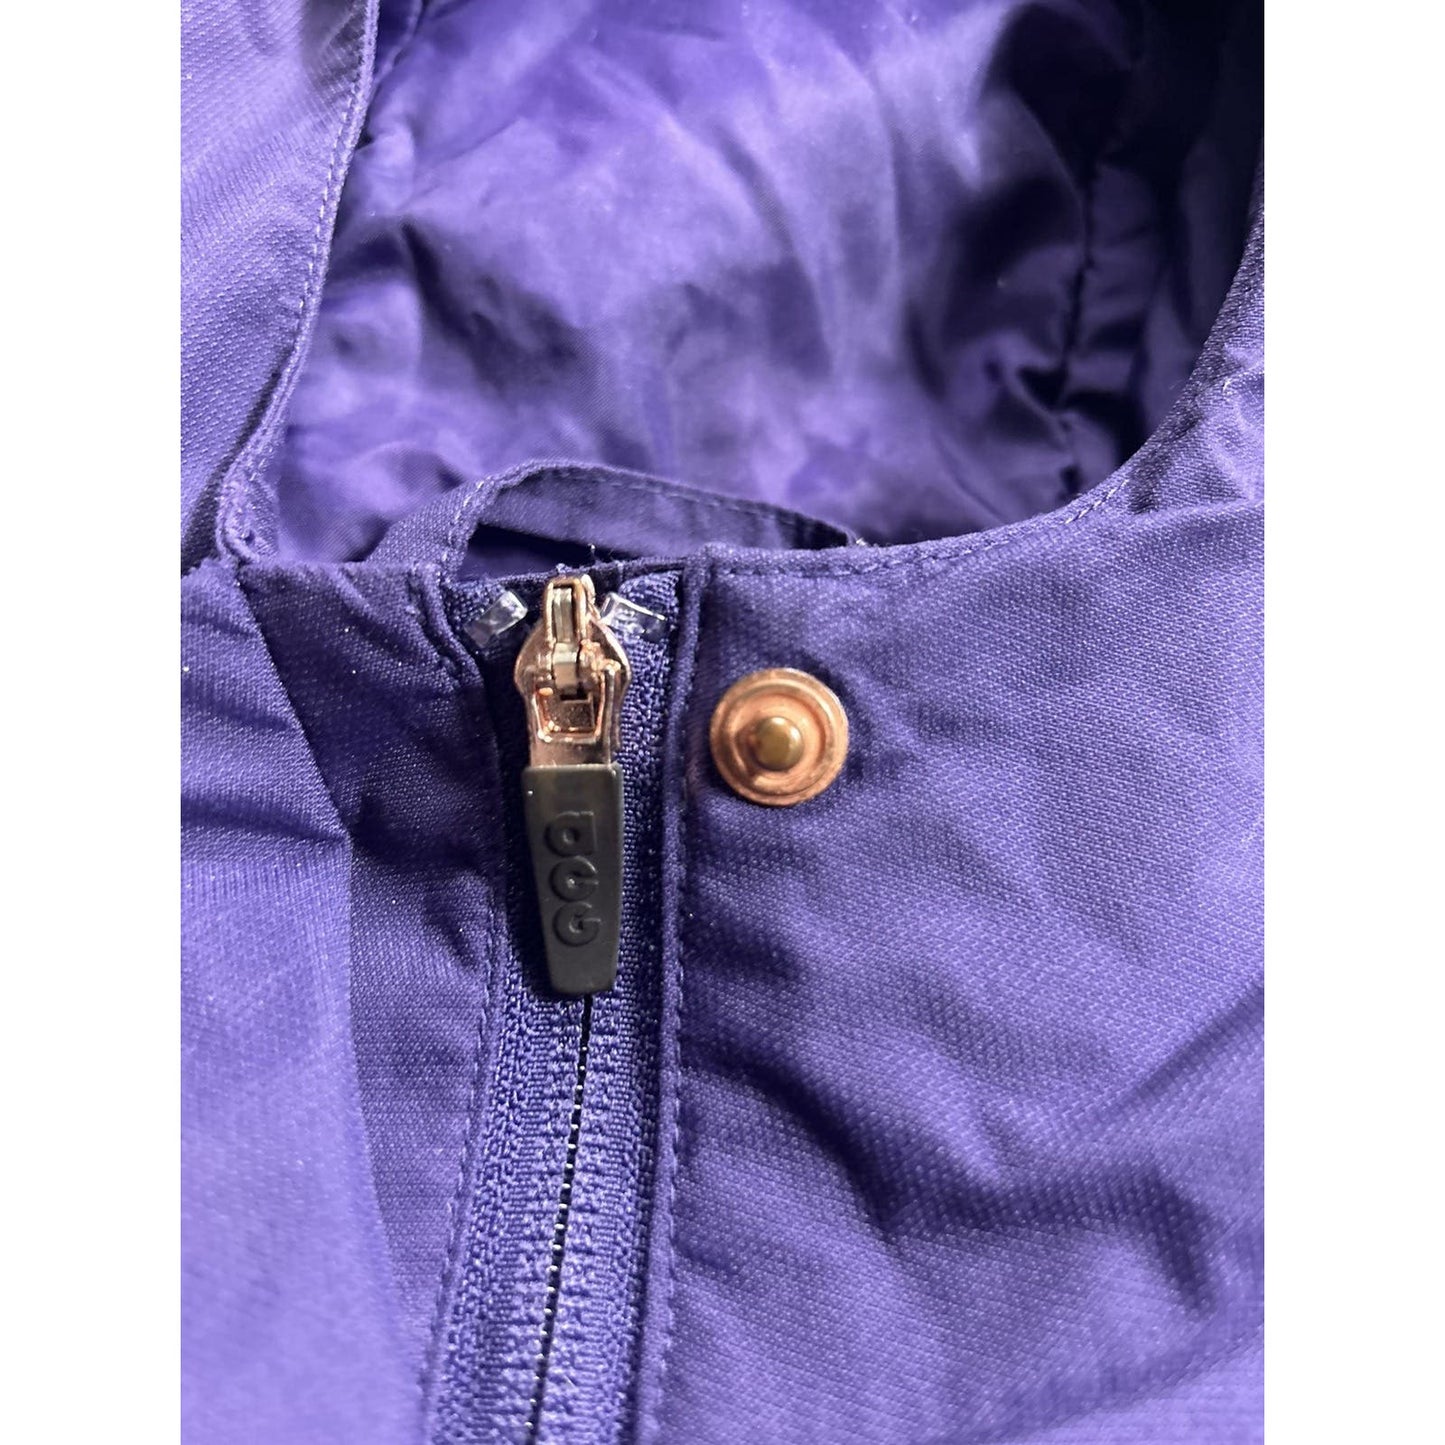 Nike ACG jacket purple storm-fit gorpcore